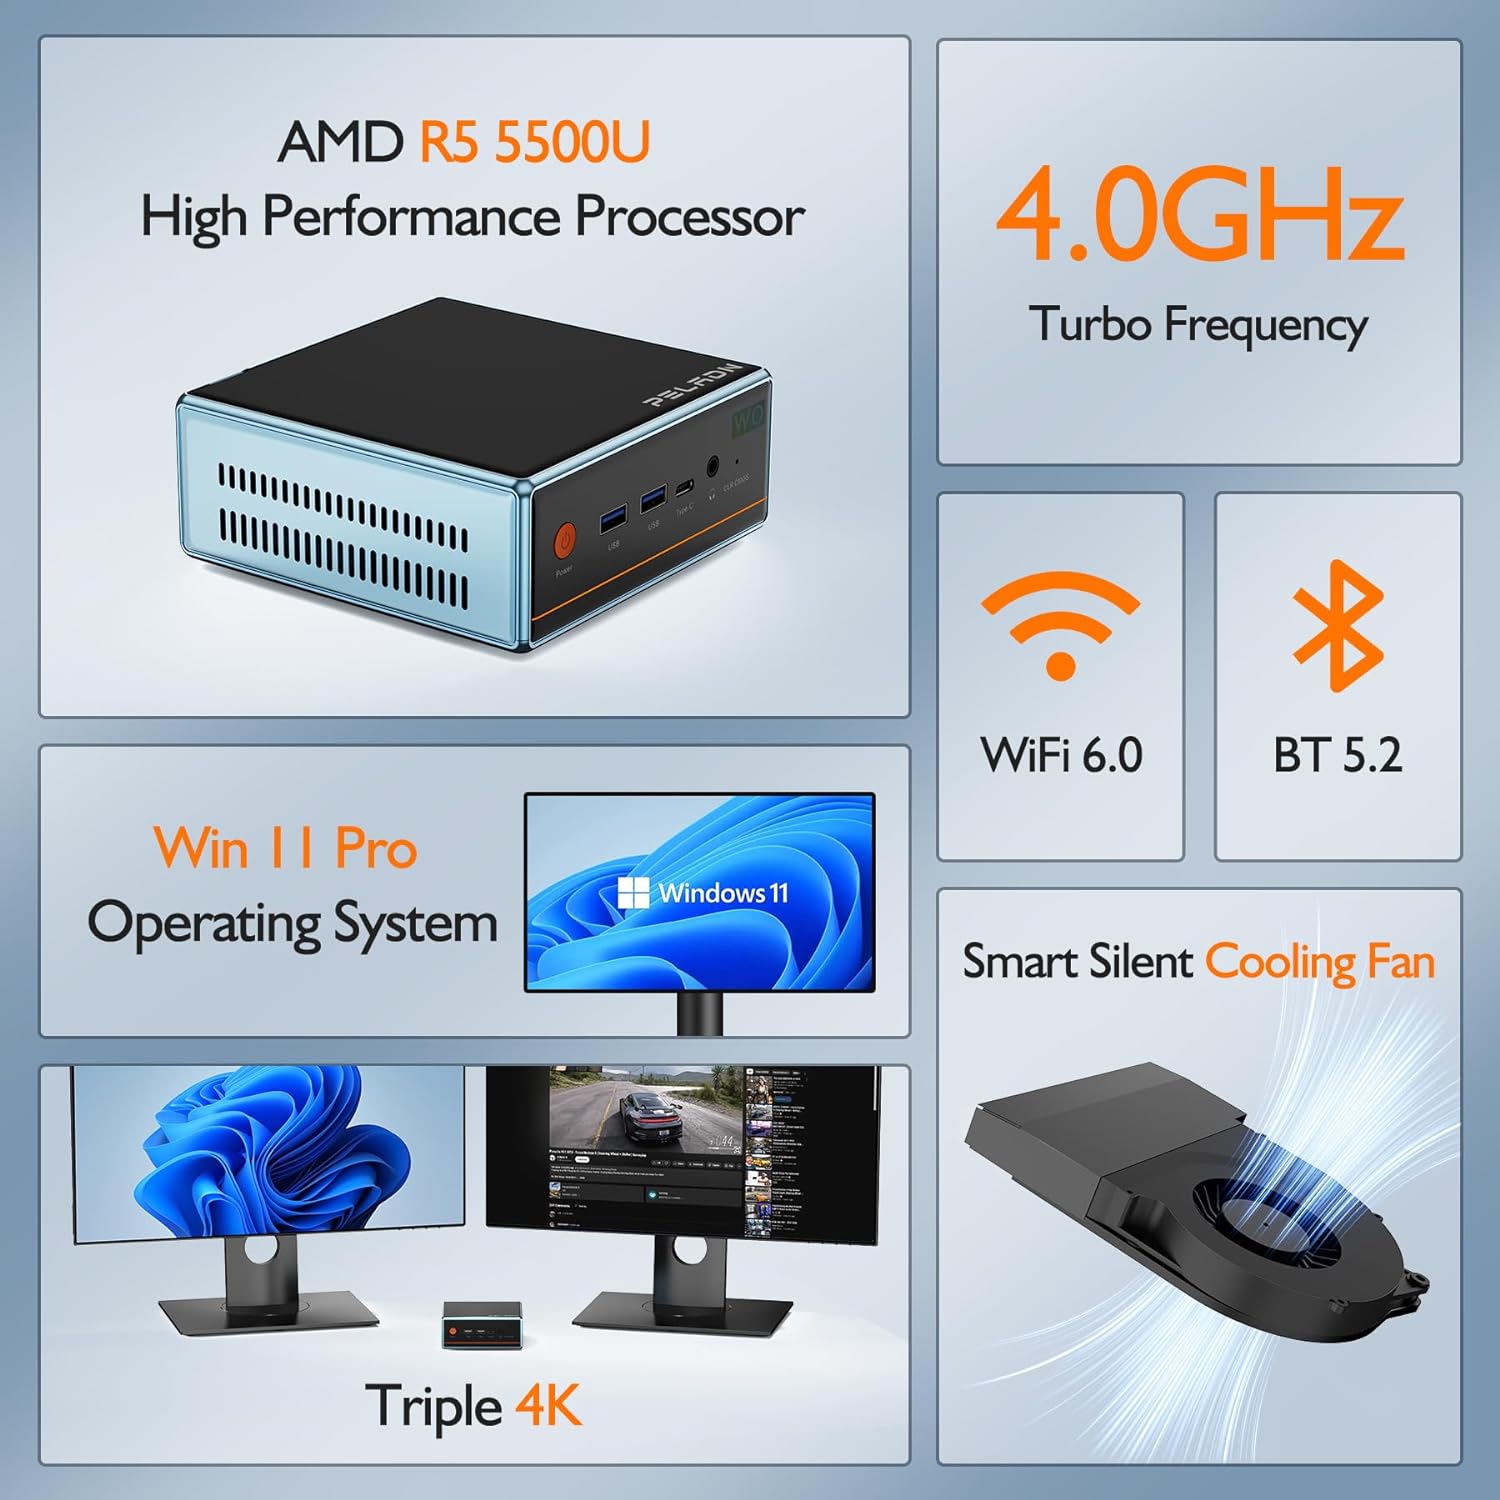 PELADN AMD Mini PC(Dual LAN), AMD Ryzen 5 5500U(6C/12T, Max 4.0GHz), 16GB DDR4 RAM 512GB NVMe SSD, WO-4 Desktop Computer Support 4K@60Hz /WiFi6/BT5.2/DP1.4/HDMI2.0/USB-C for Office/Home/Light Gaming